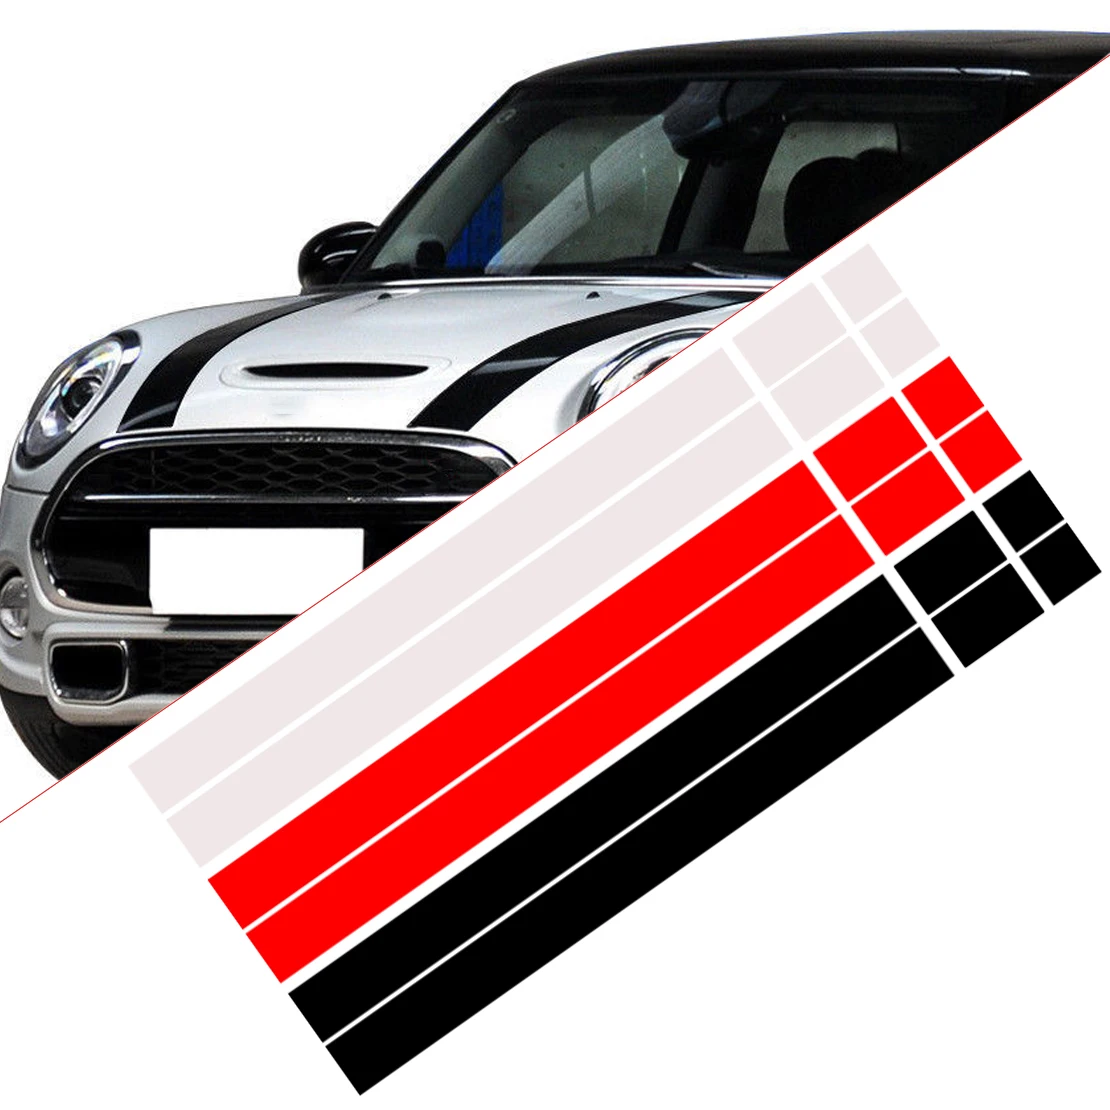 CITALL 2Pcs Car Bonnet Stripes Hood Sticker Cover Vinyl Decal Fit for MINI Cooper R50 R53 R56 R55 Black/White/Red dWm2754536